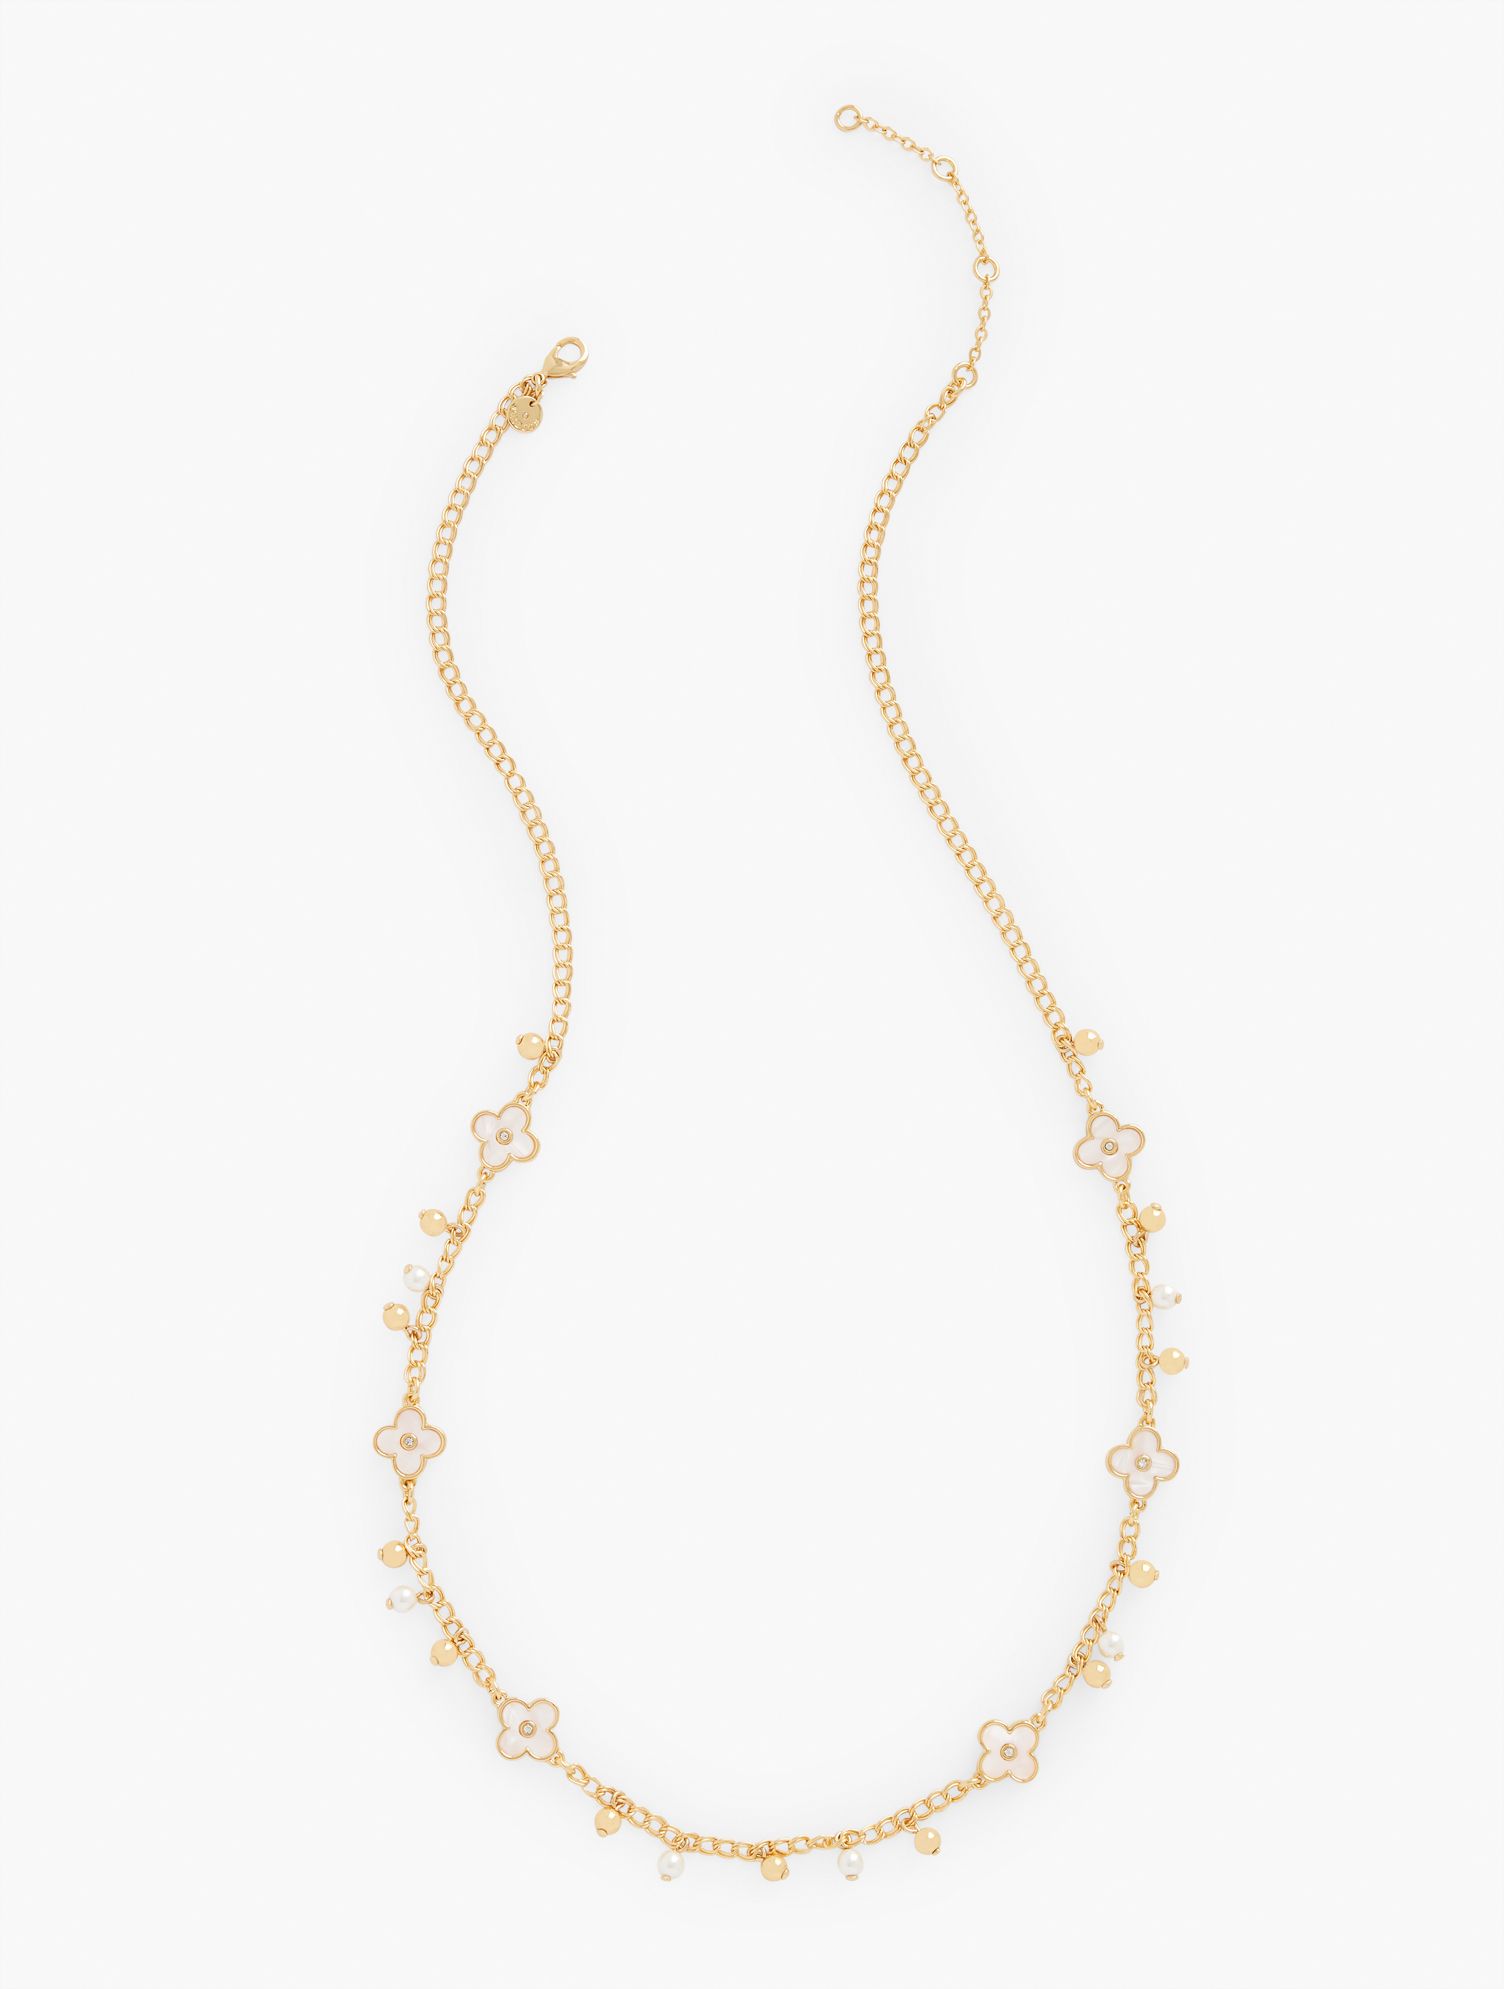 Quatrefoil Charm Necklace - Ivory Pearl/Gold - 001 Talbots | Talbots